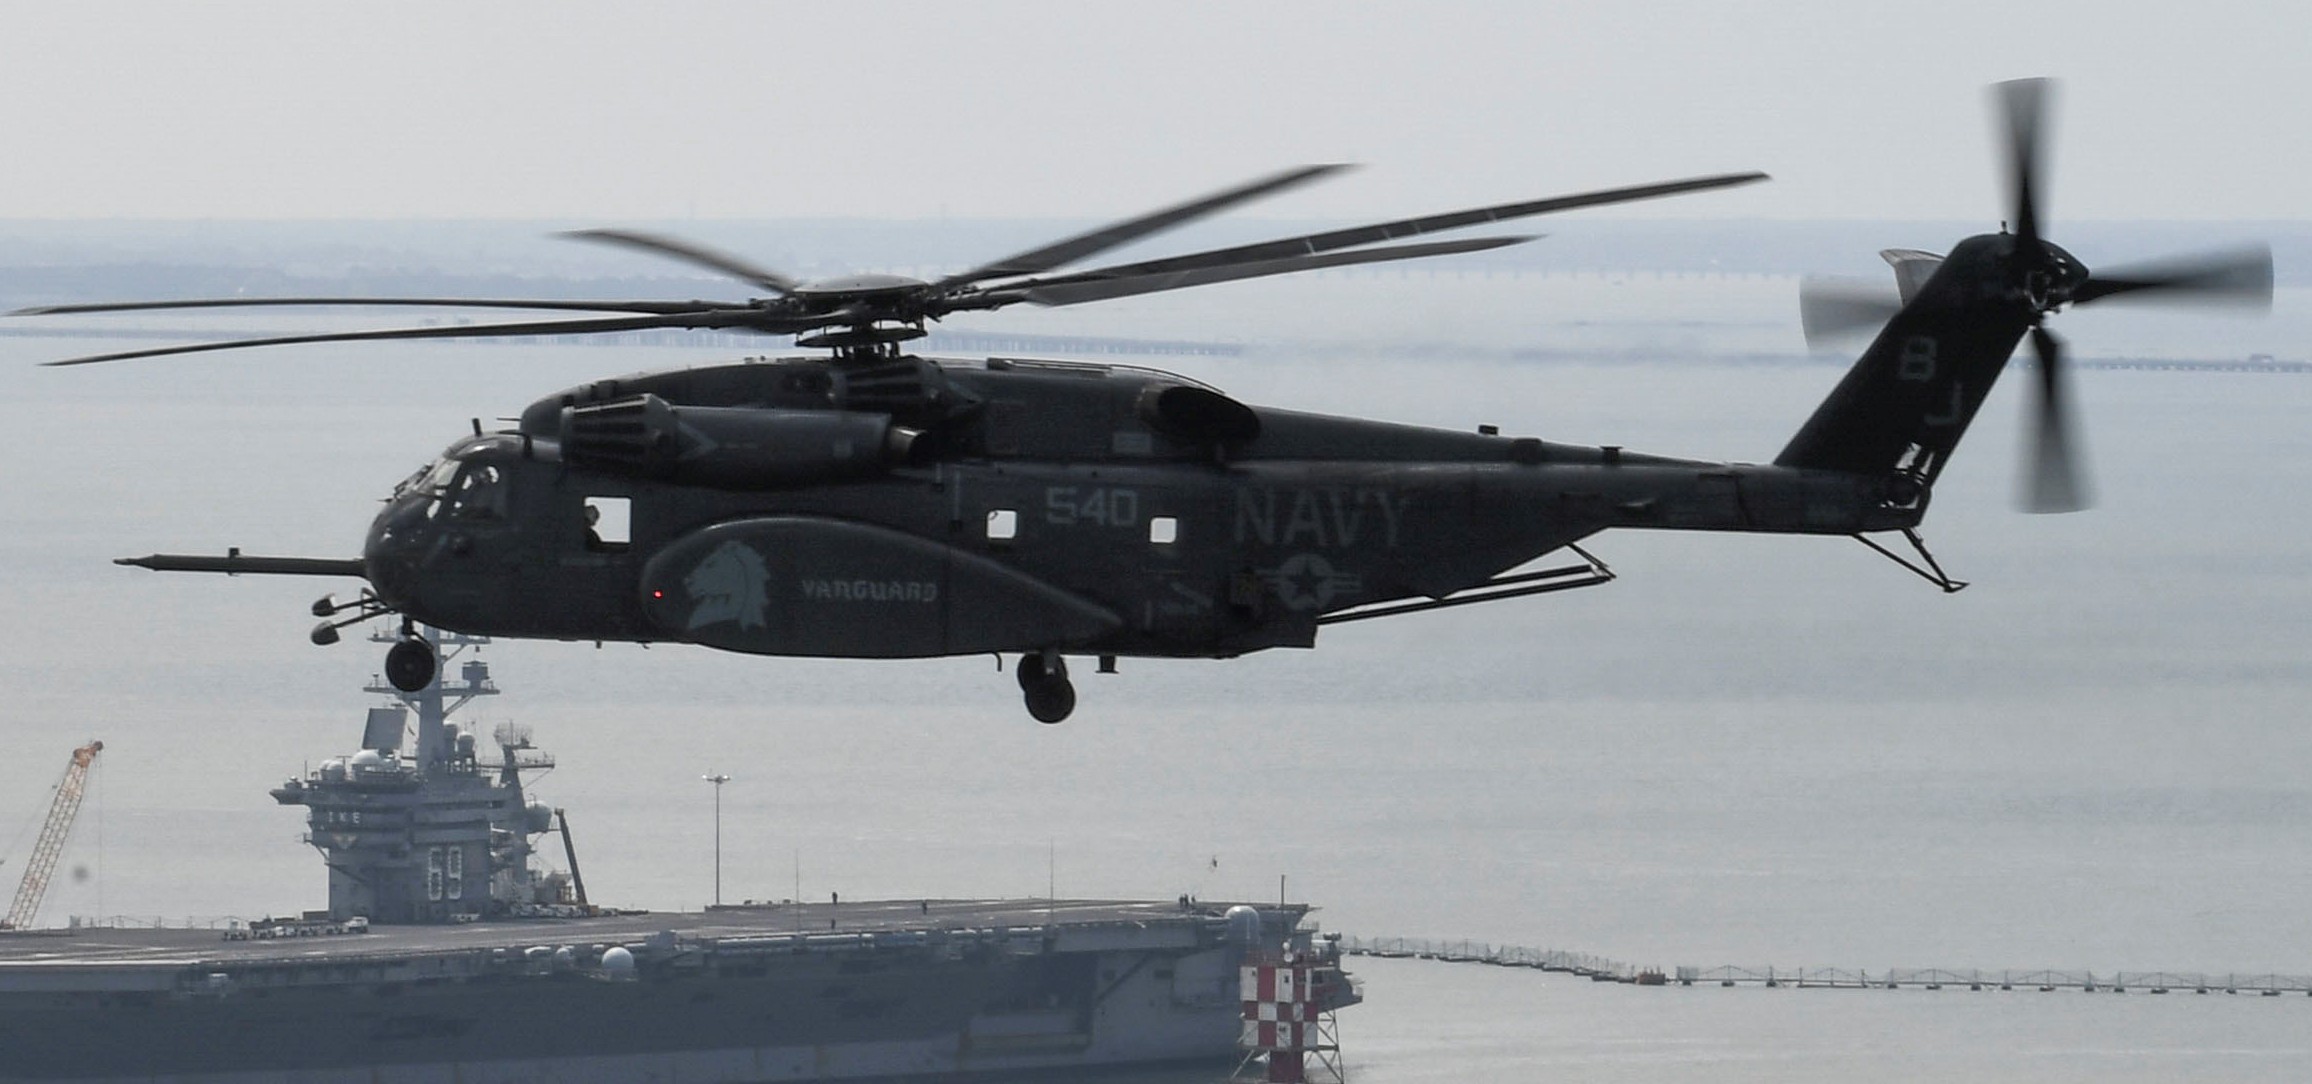 hm-14 vanguard helicopter mine countermeasures squadron navy mh-53e sea dragon 14